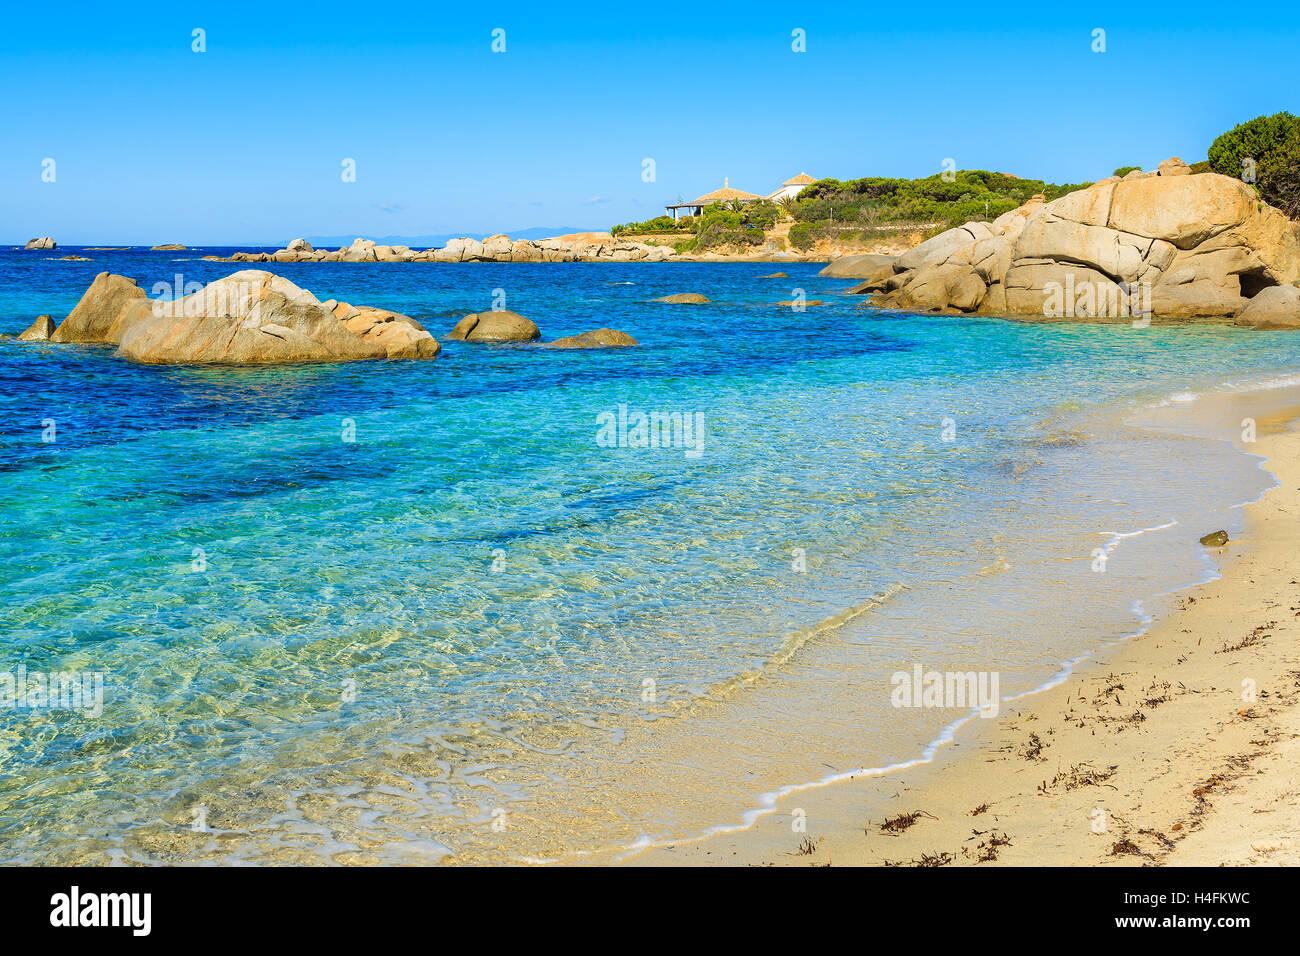 A view of turquoise sea water on idyllic beach, Sardinia island, Italy Stock Photo